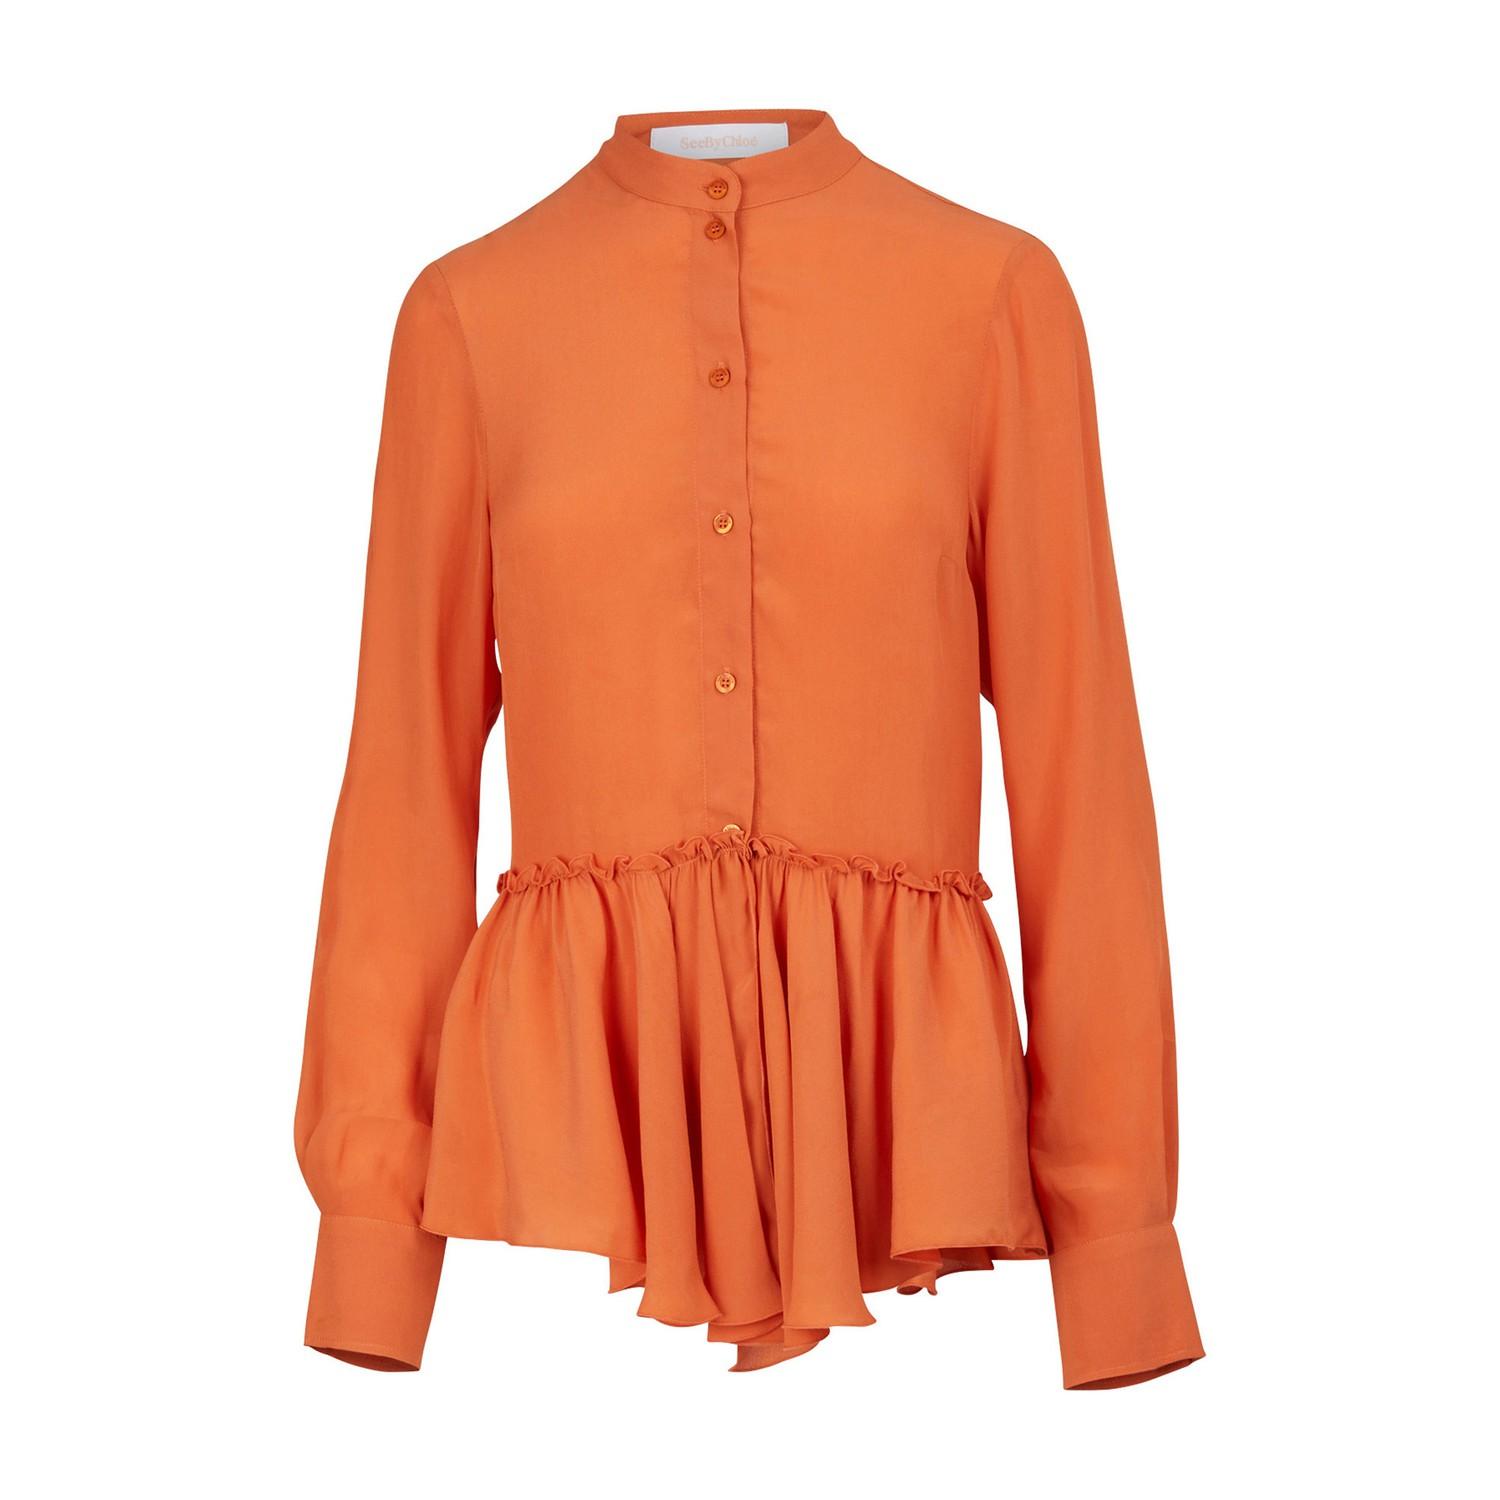 See By Chloé Silk Blend Blouse in Chestnut Orange (Orange) - Save 58% ...